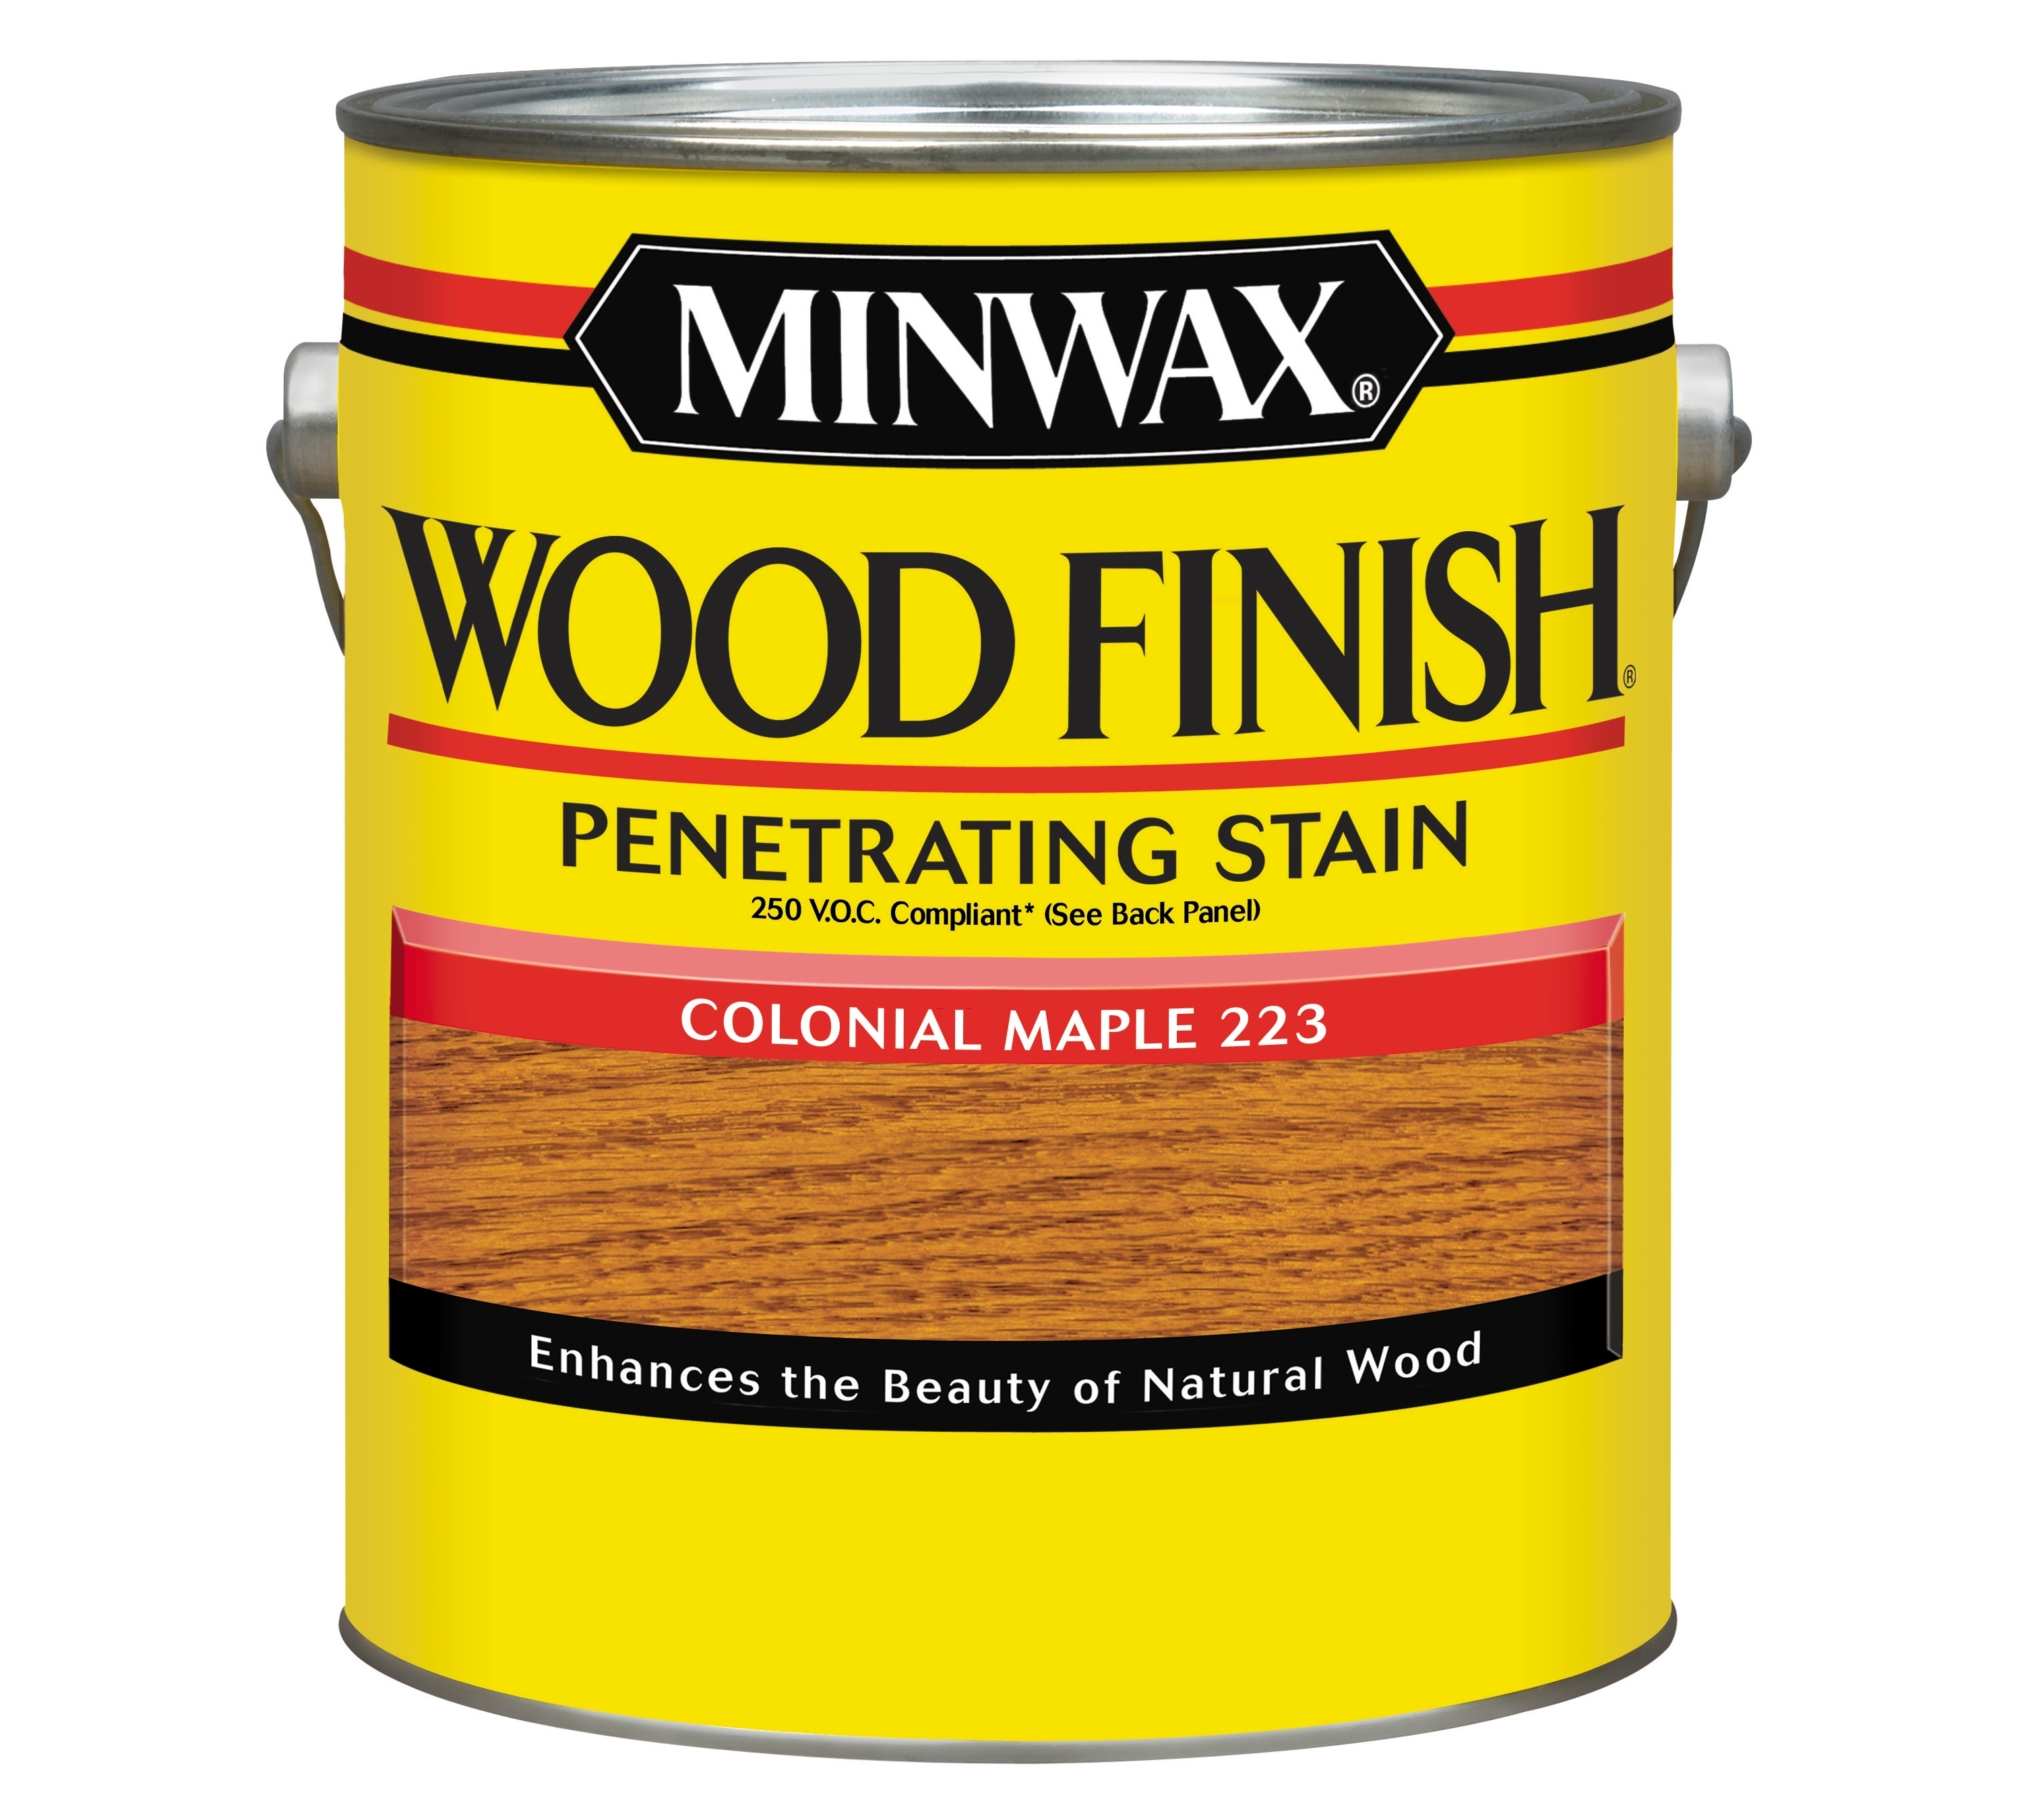 Minwax Wood Finish Colonial Maple